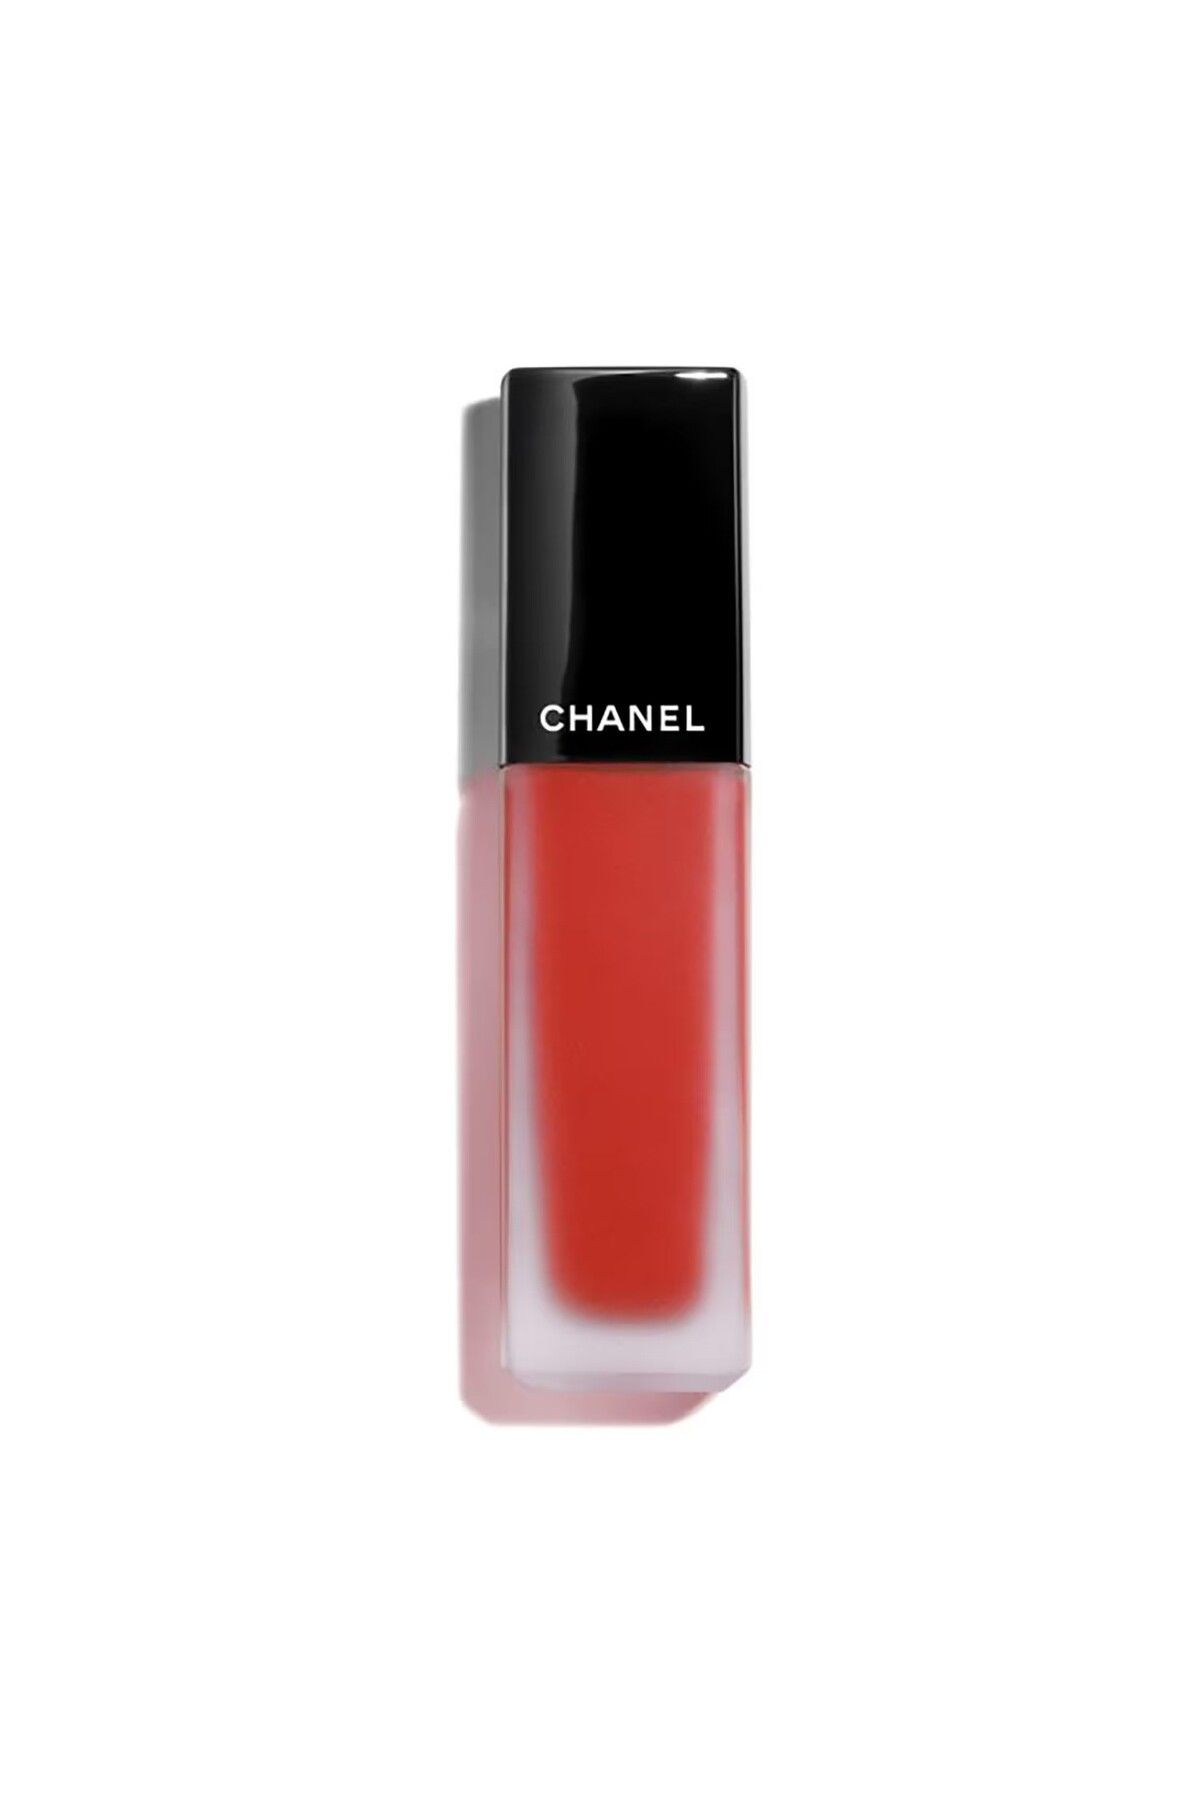 Chanel رژ لب ROUGE ALLURE INK مات و مخملی 8 ساعته و رنگدانه شدید رنگ قرمز روشن